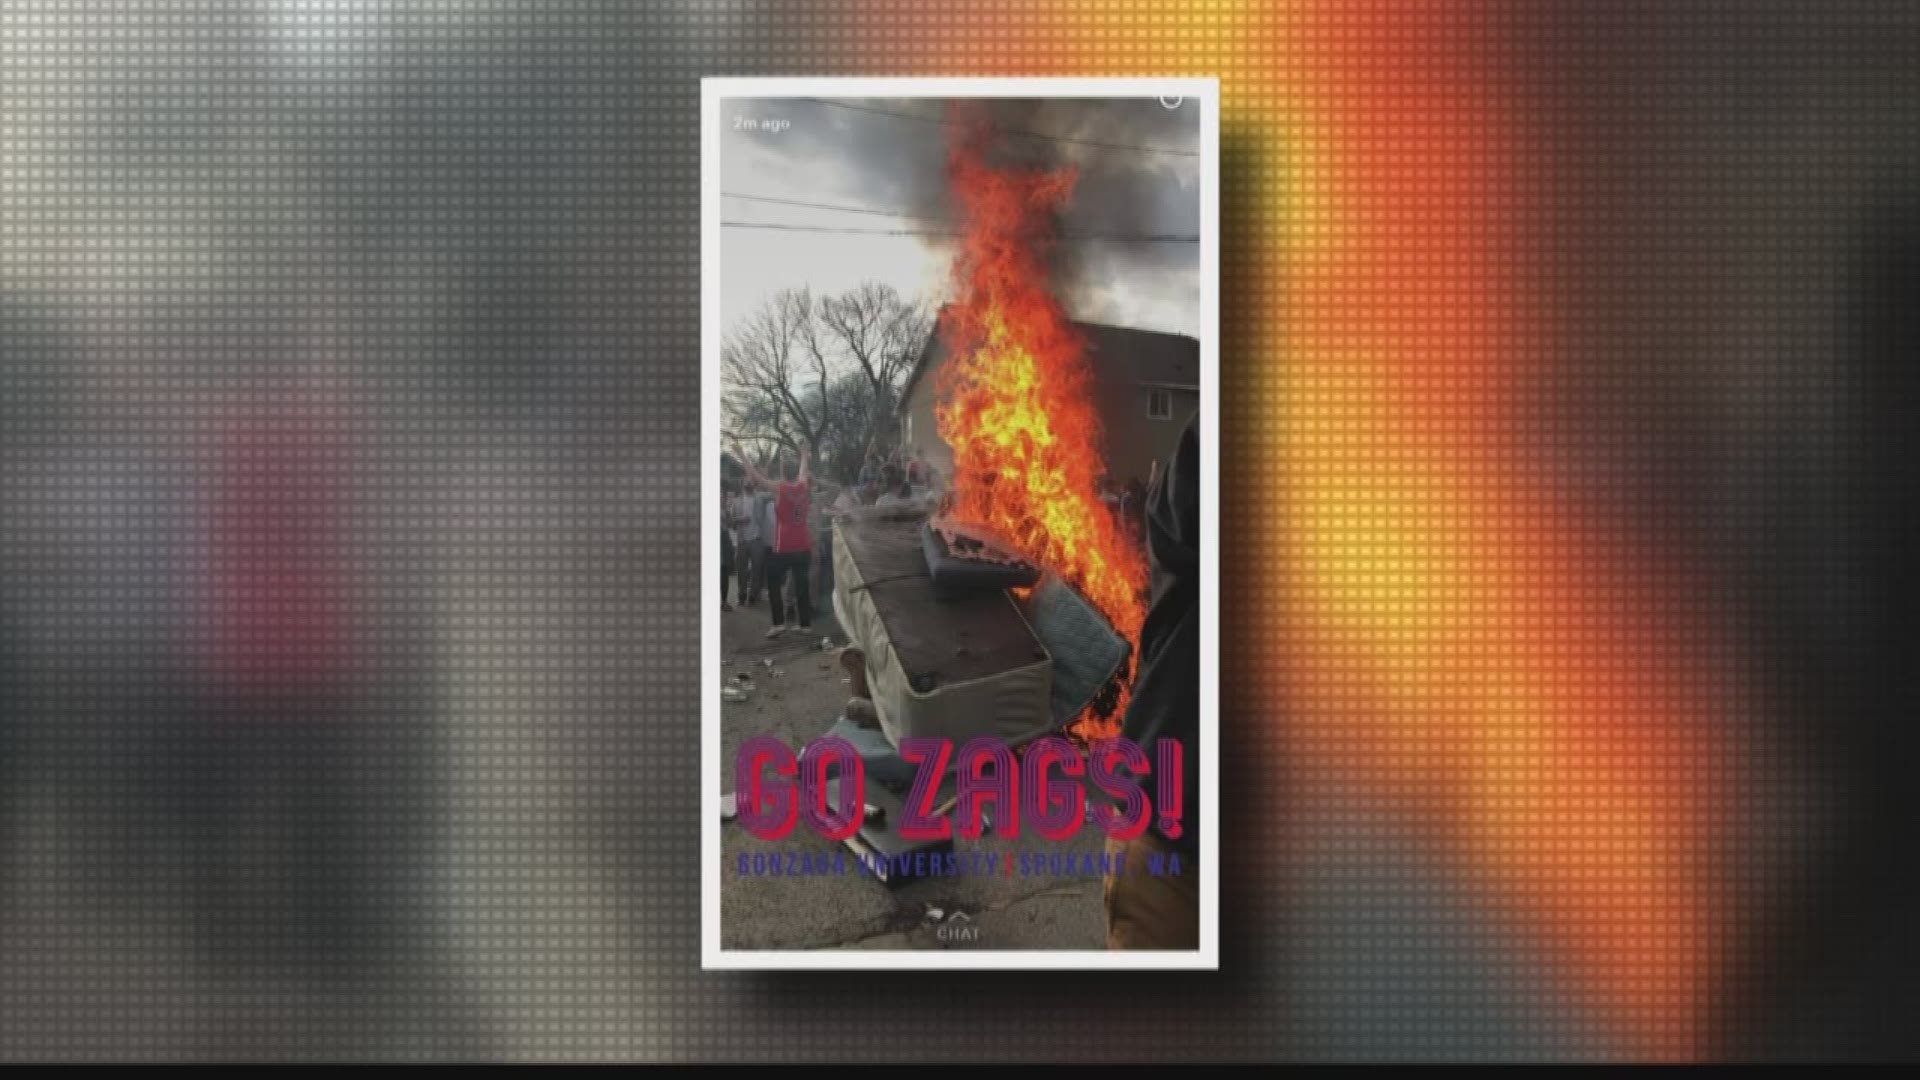 Students burn couch near GU campus